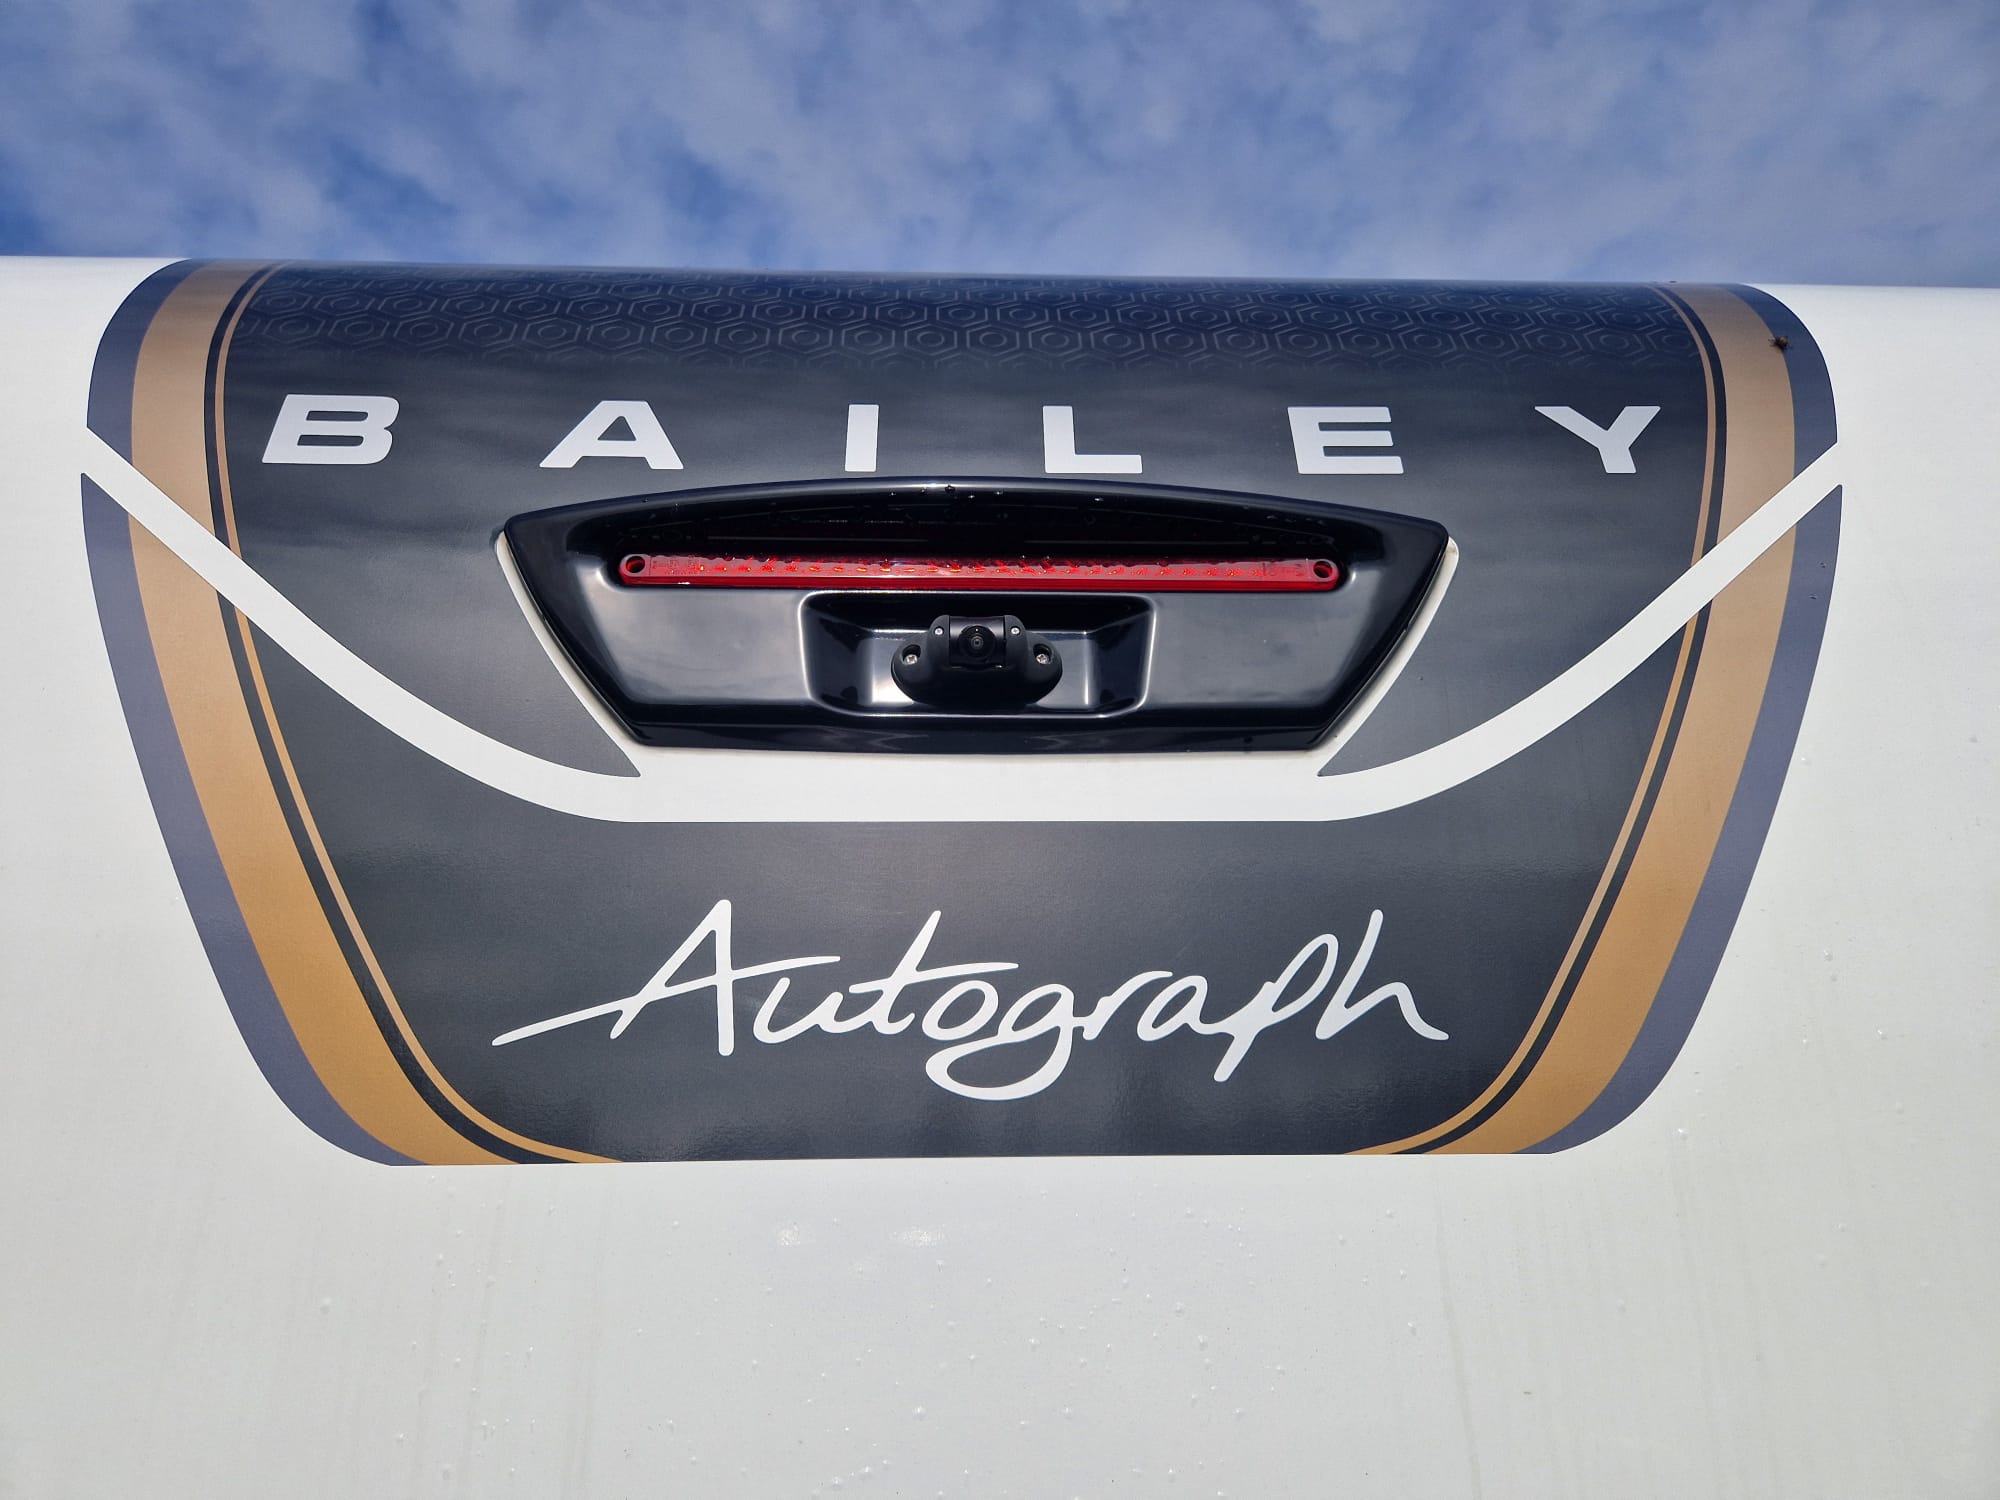 Bailey Autograph 79-4i - Manual